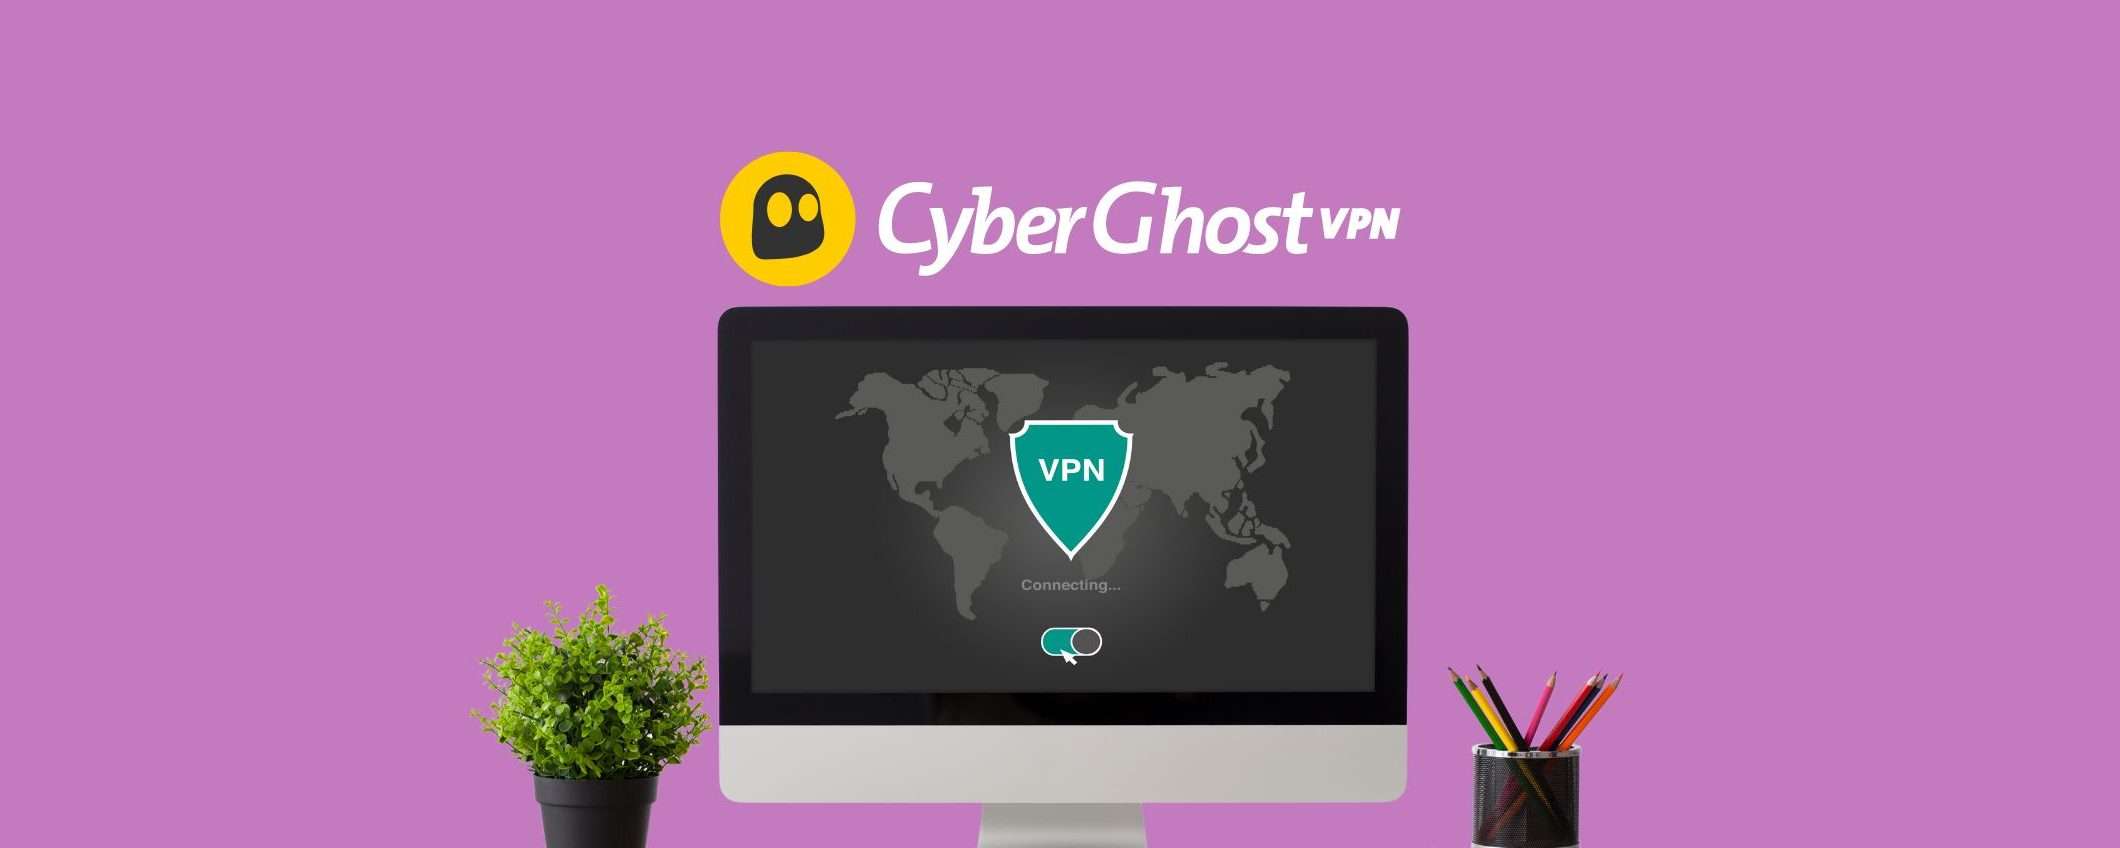 CyberGhost VPN: ultimi giorni per l'offerta super